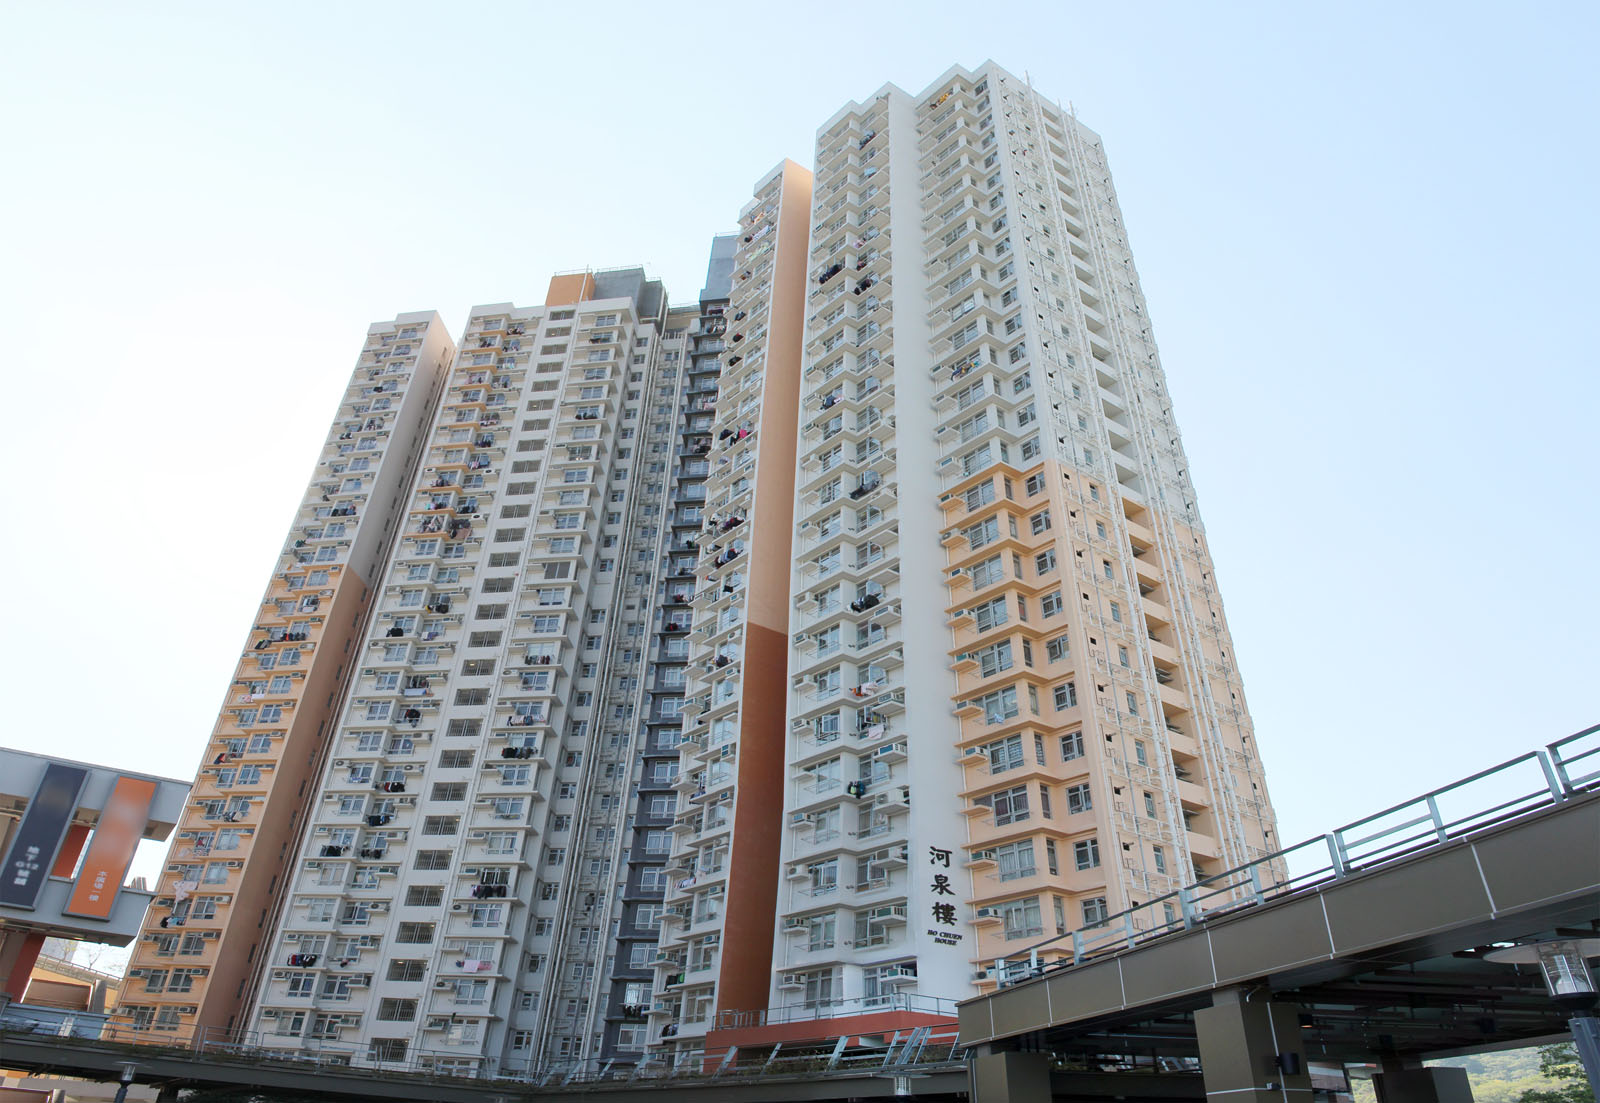 Photo 3: Shui Chuen O Estate